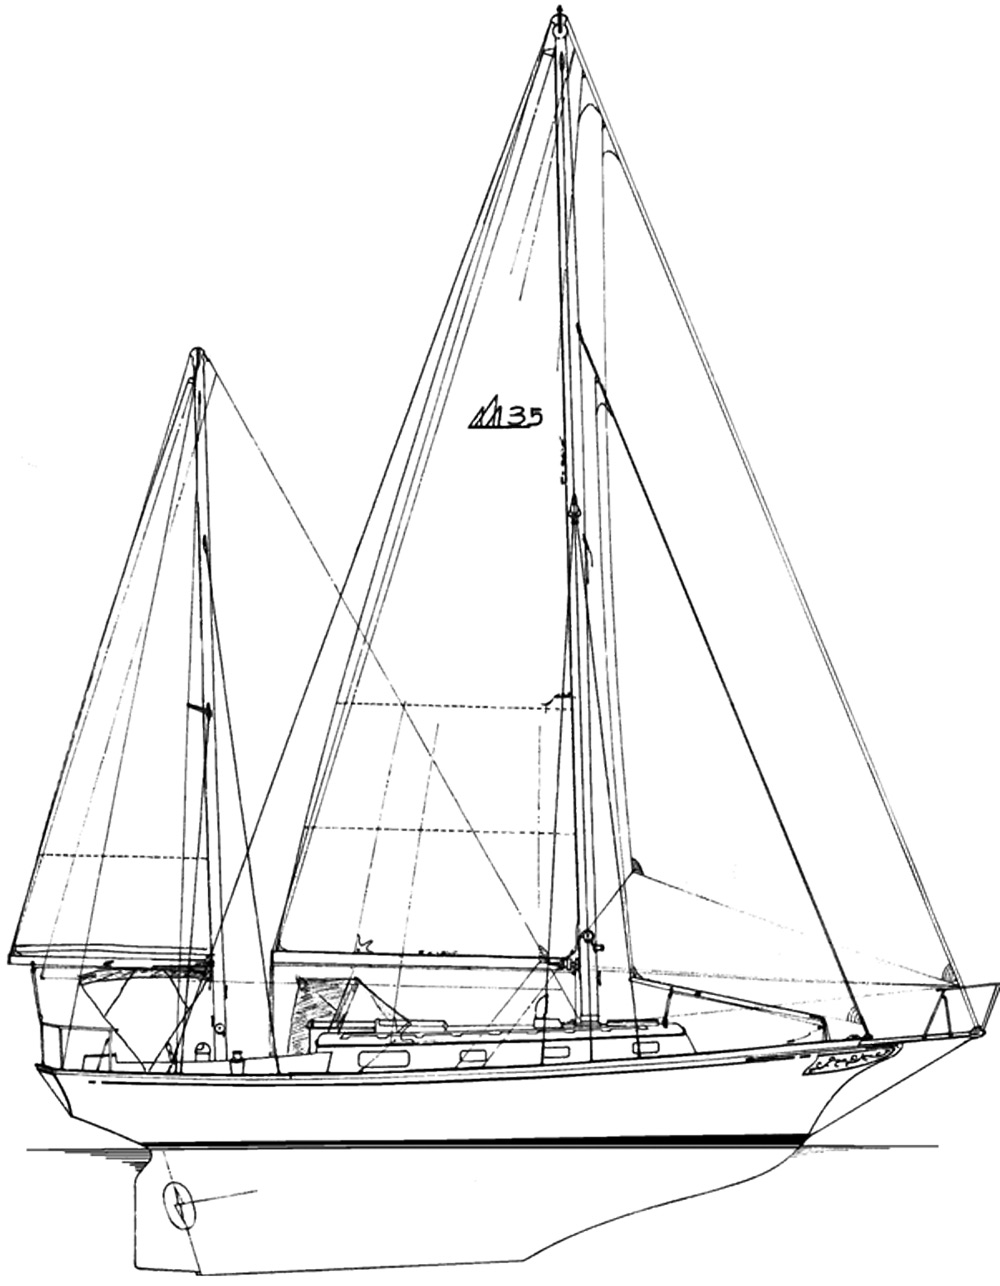 fuji 35 sailboat review